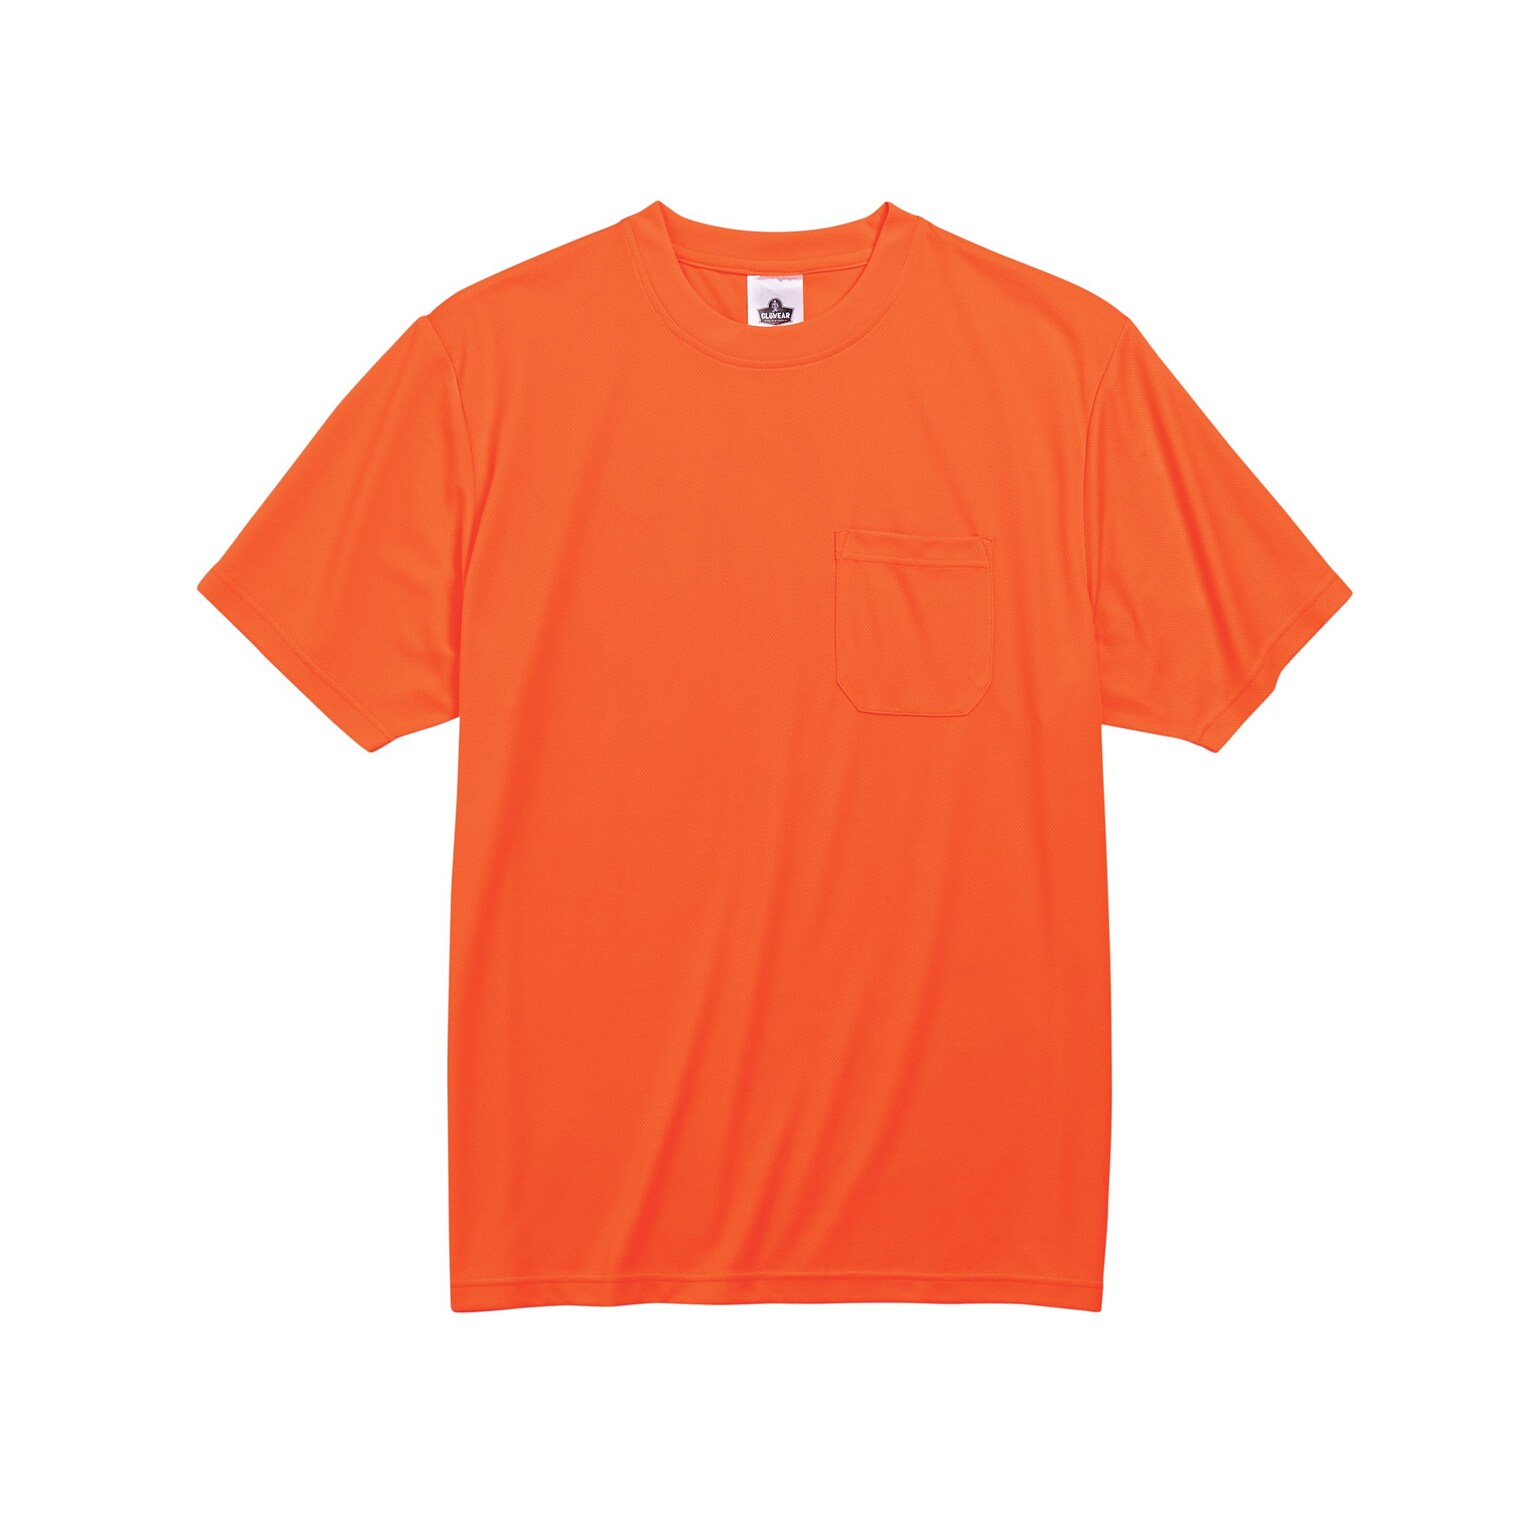 Ergodyne GloWear 8089 High Visibility Short Sleeve T-Shirt, Orange, X-Large (21565)